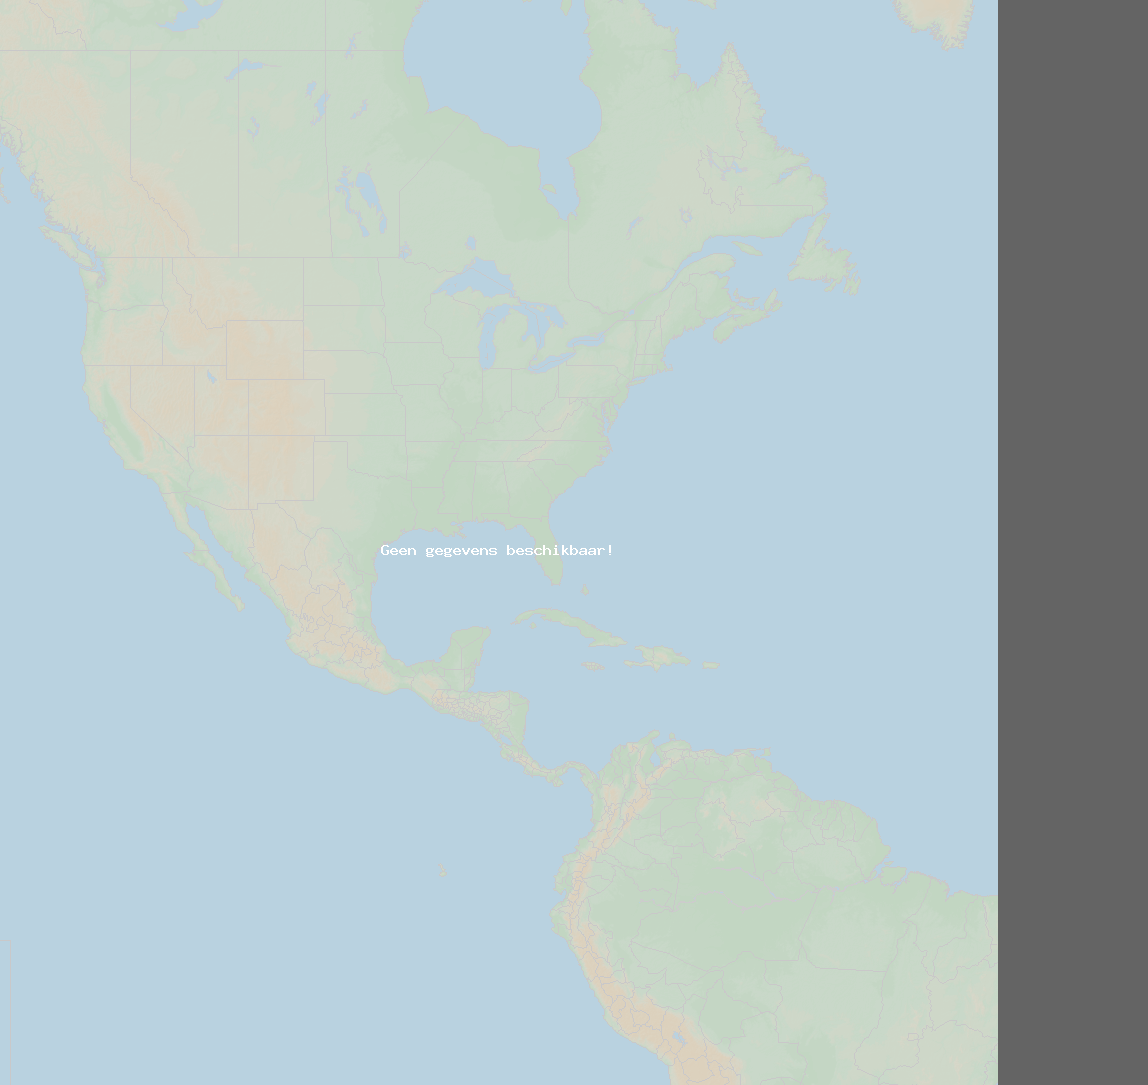 Inslagverhouding (Station Kingsport (Blue)) North America 2021 maart